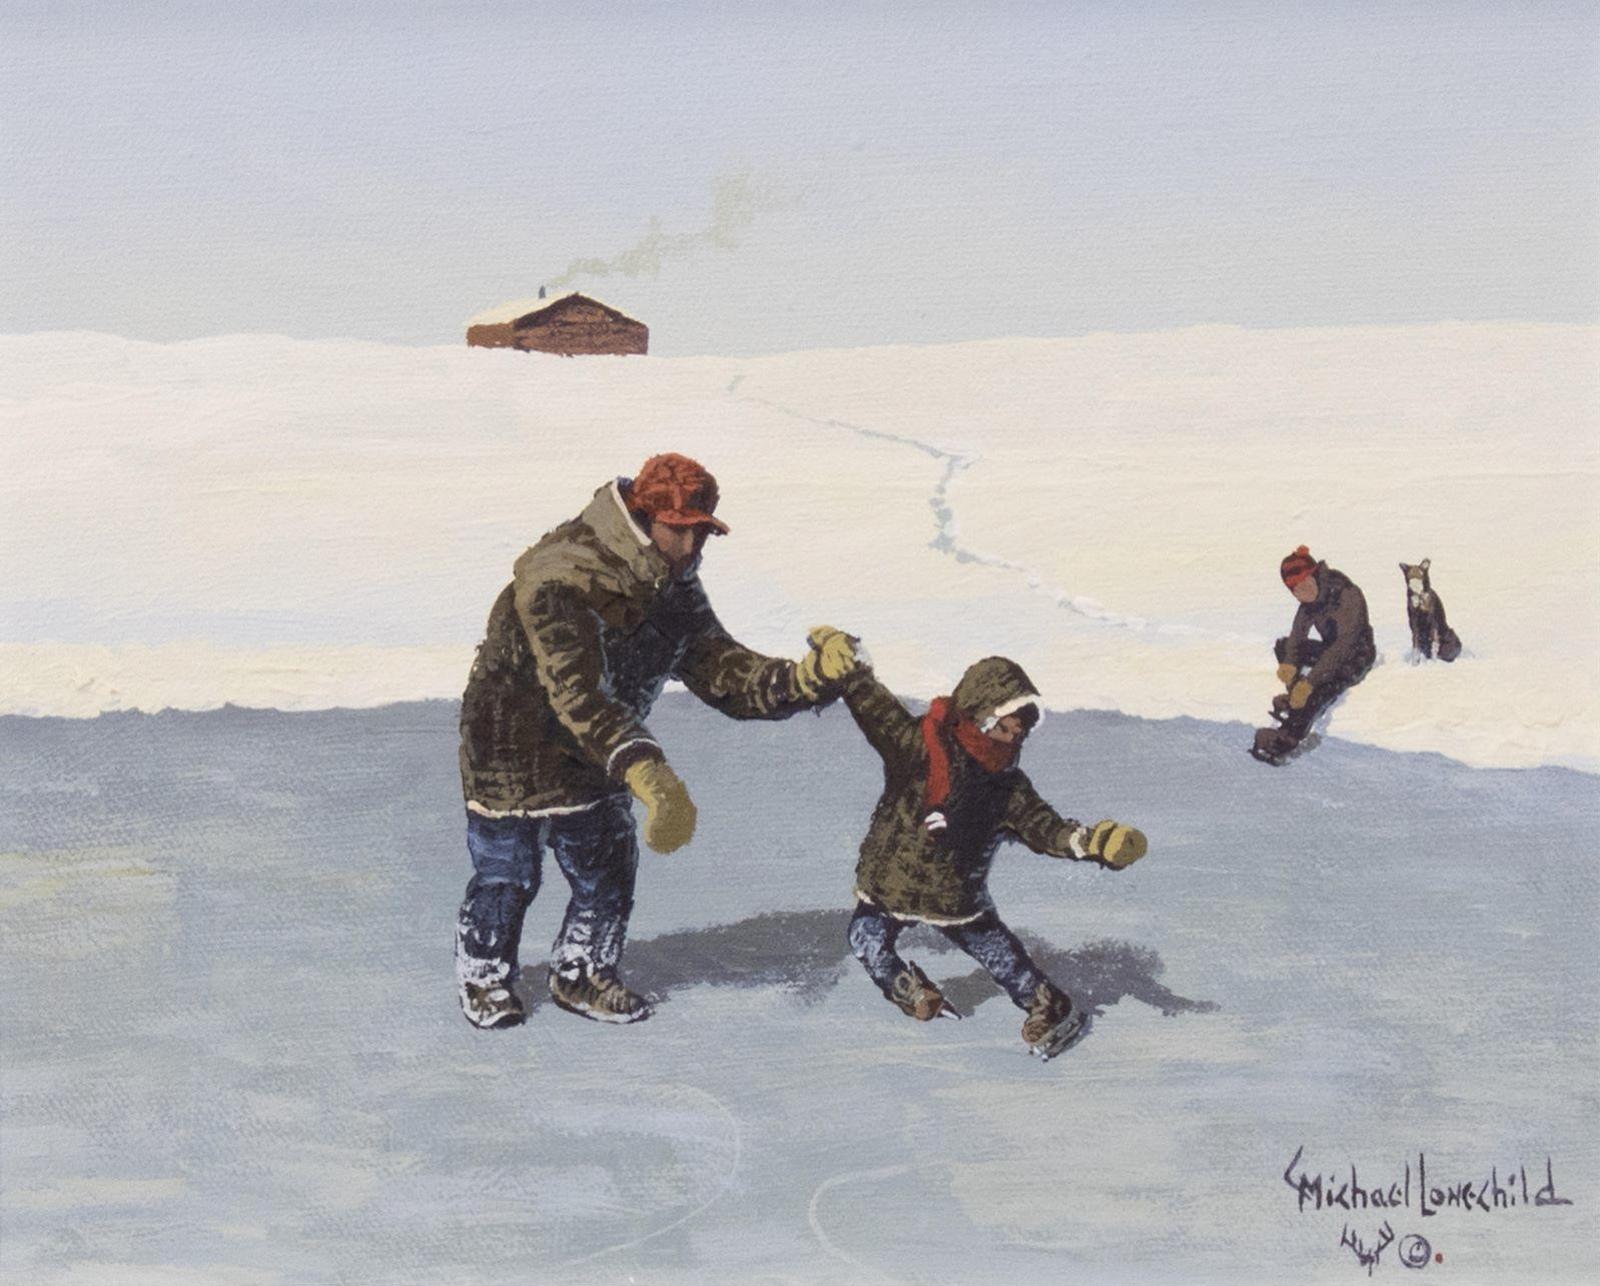 Michael Lonechild (1955) - Skating Lesson